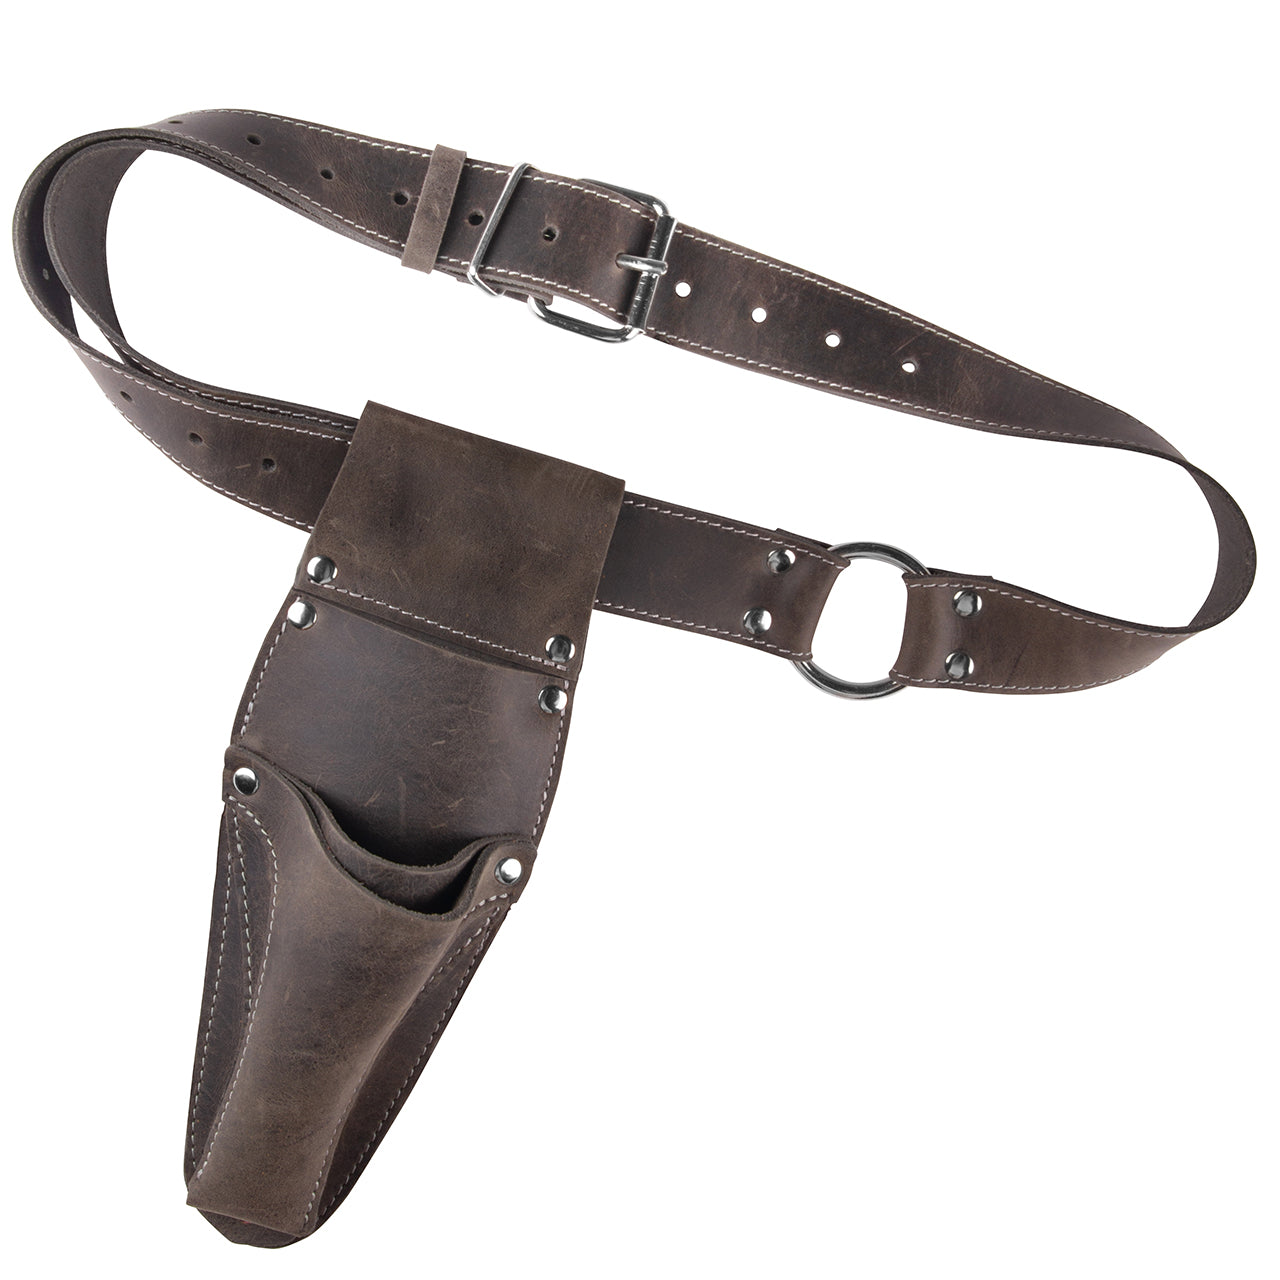 Hori Hori Leather Sheath belt with Pruner and Scissor Pockets. Personalized florist Tool Belt Leather, Gardening Belt with pockets.